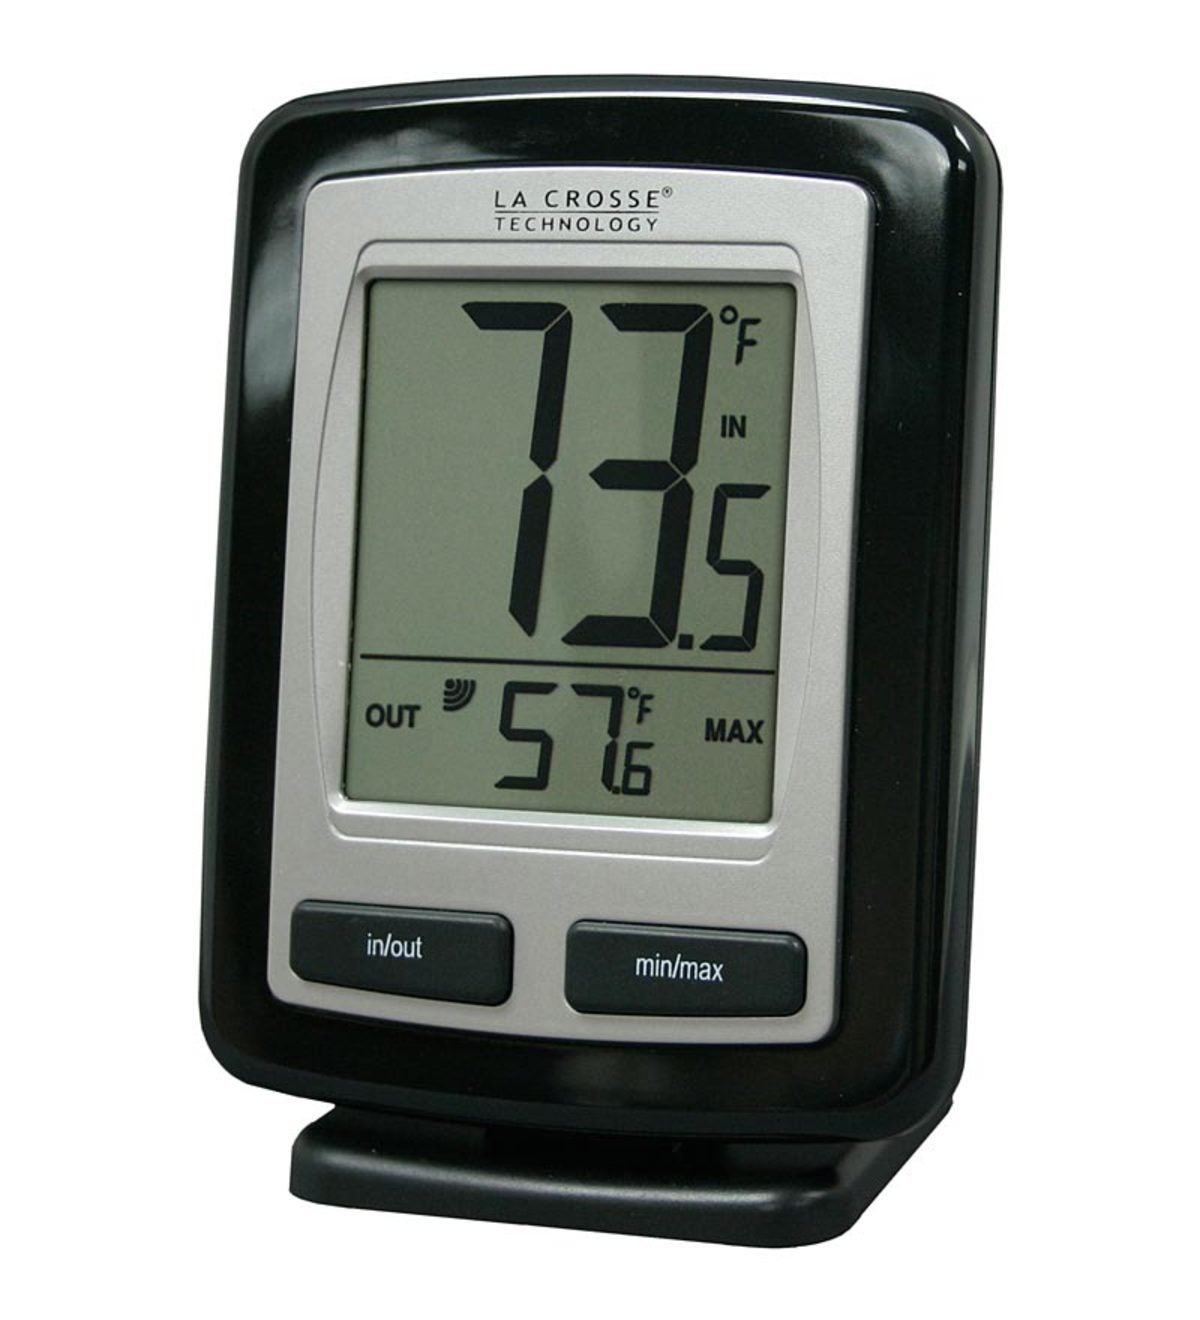 Wireless Thermometer by La Crosse Technology